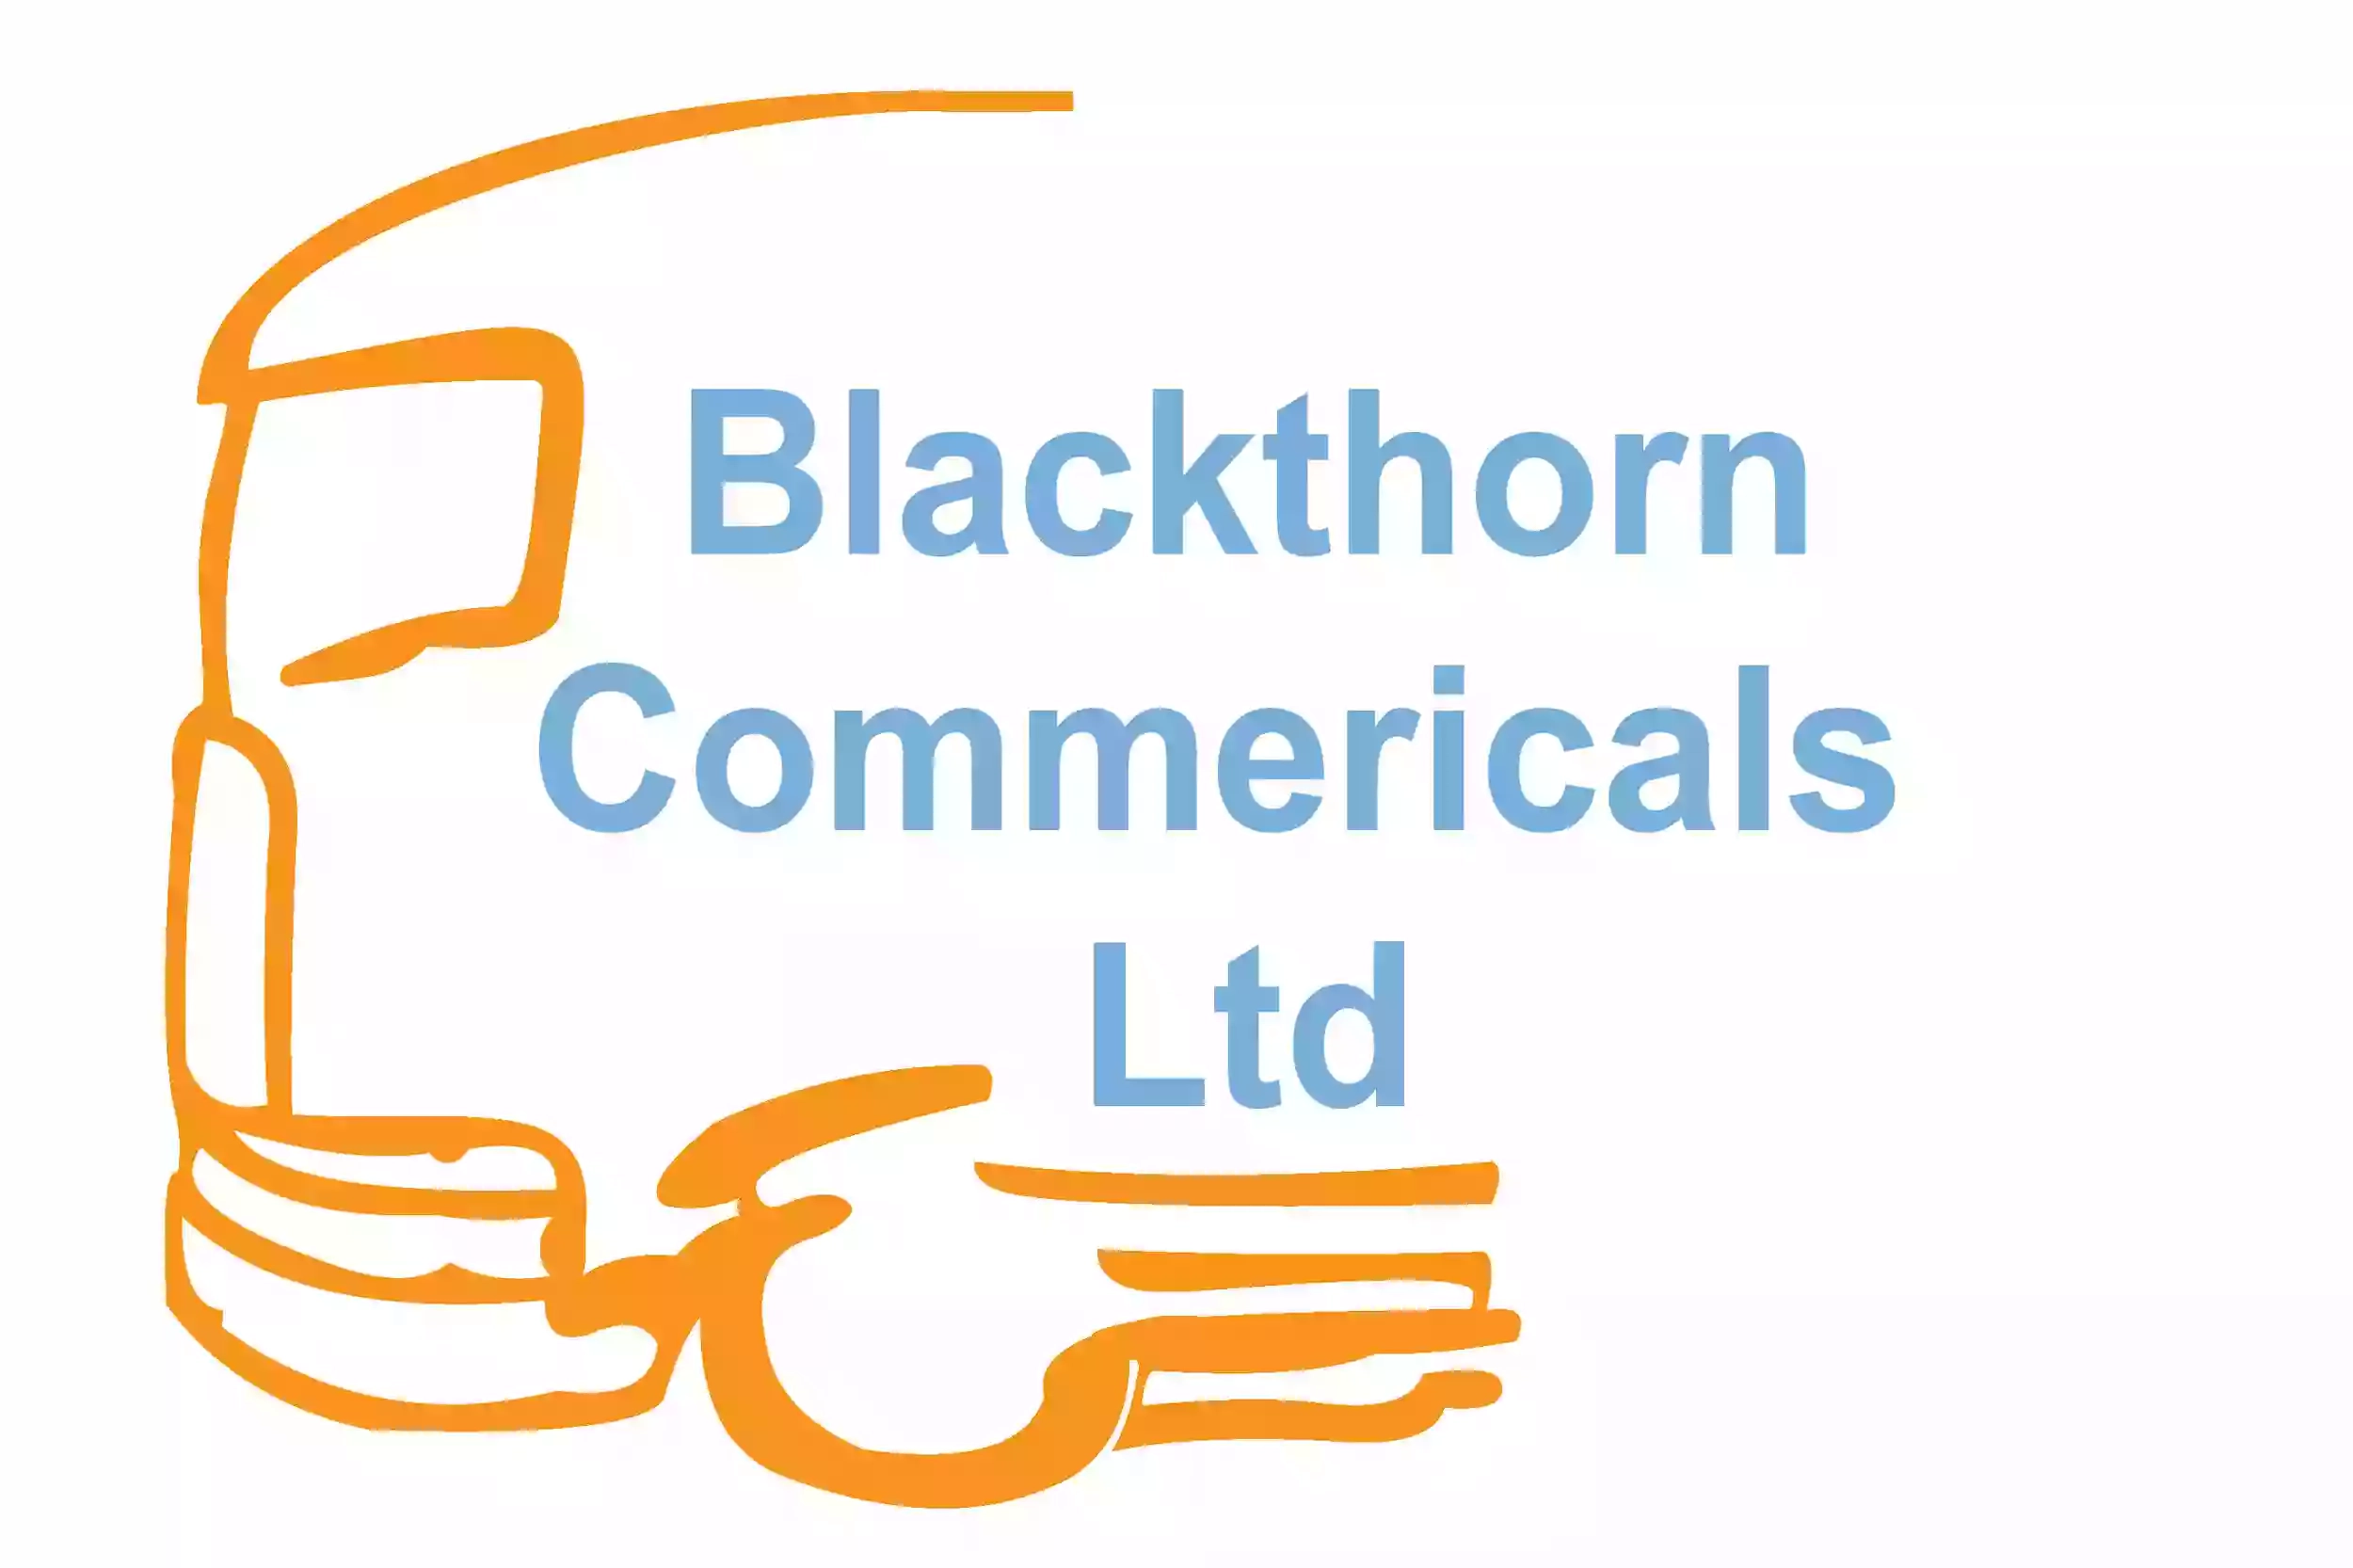 Blackthorn Commercials Ltd